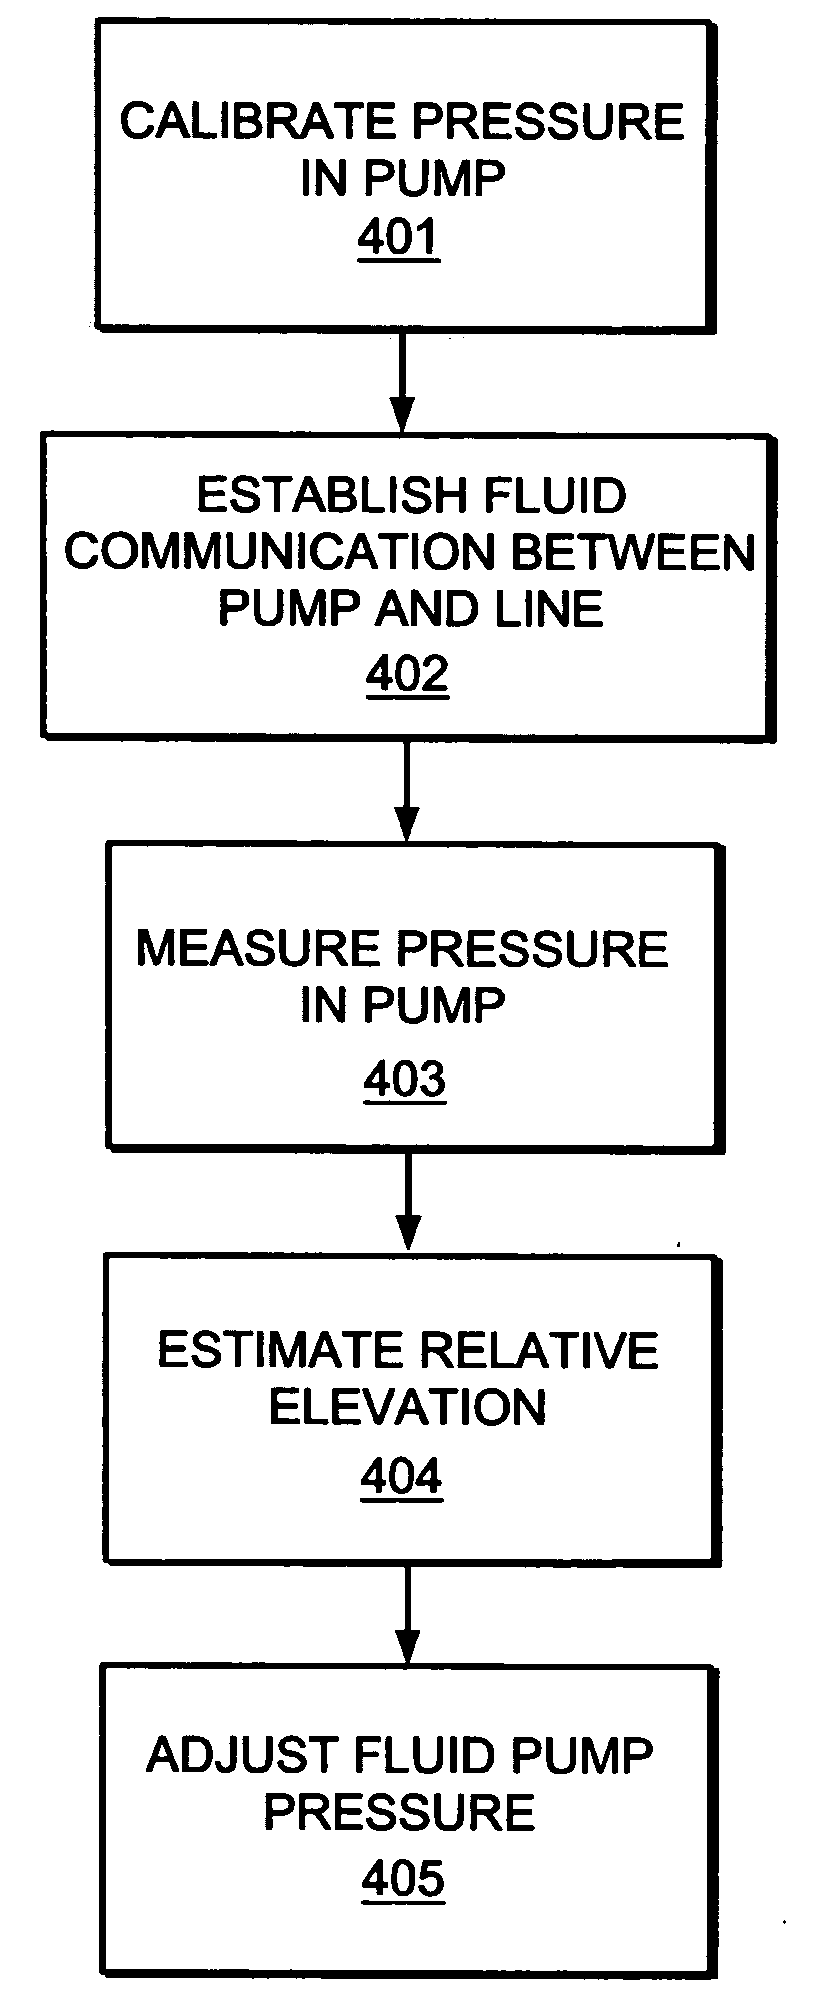 Method and device for regulating fluid pump pressures